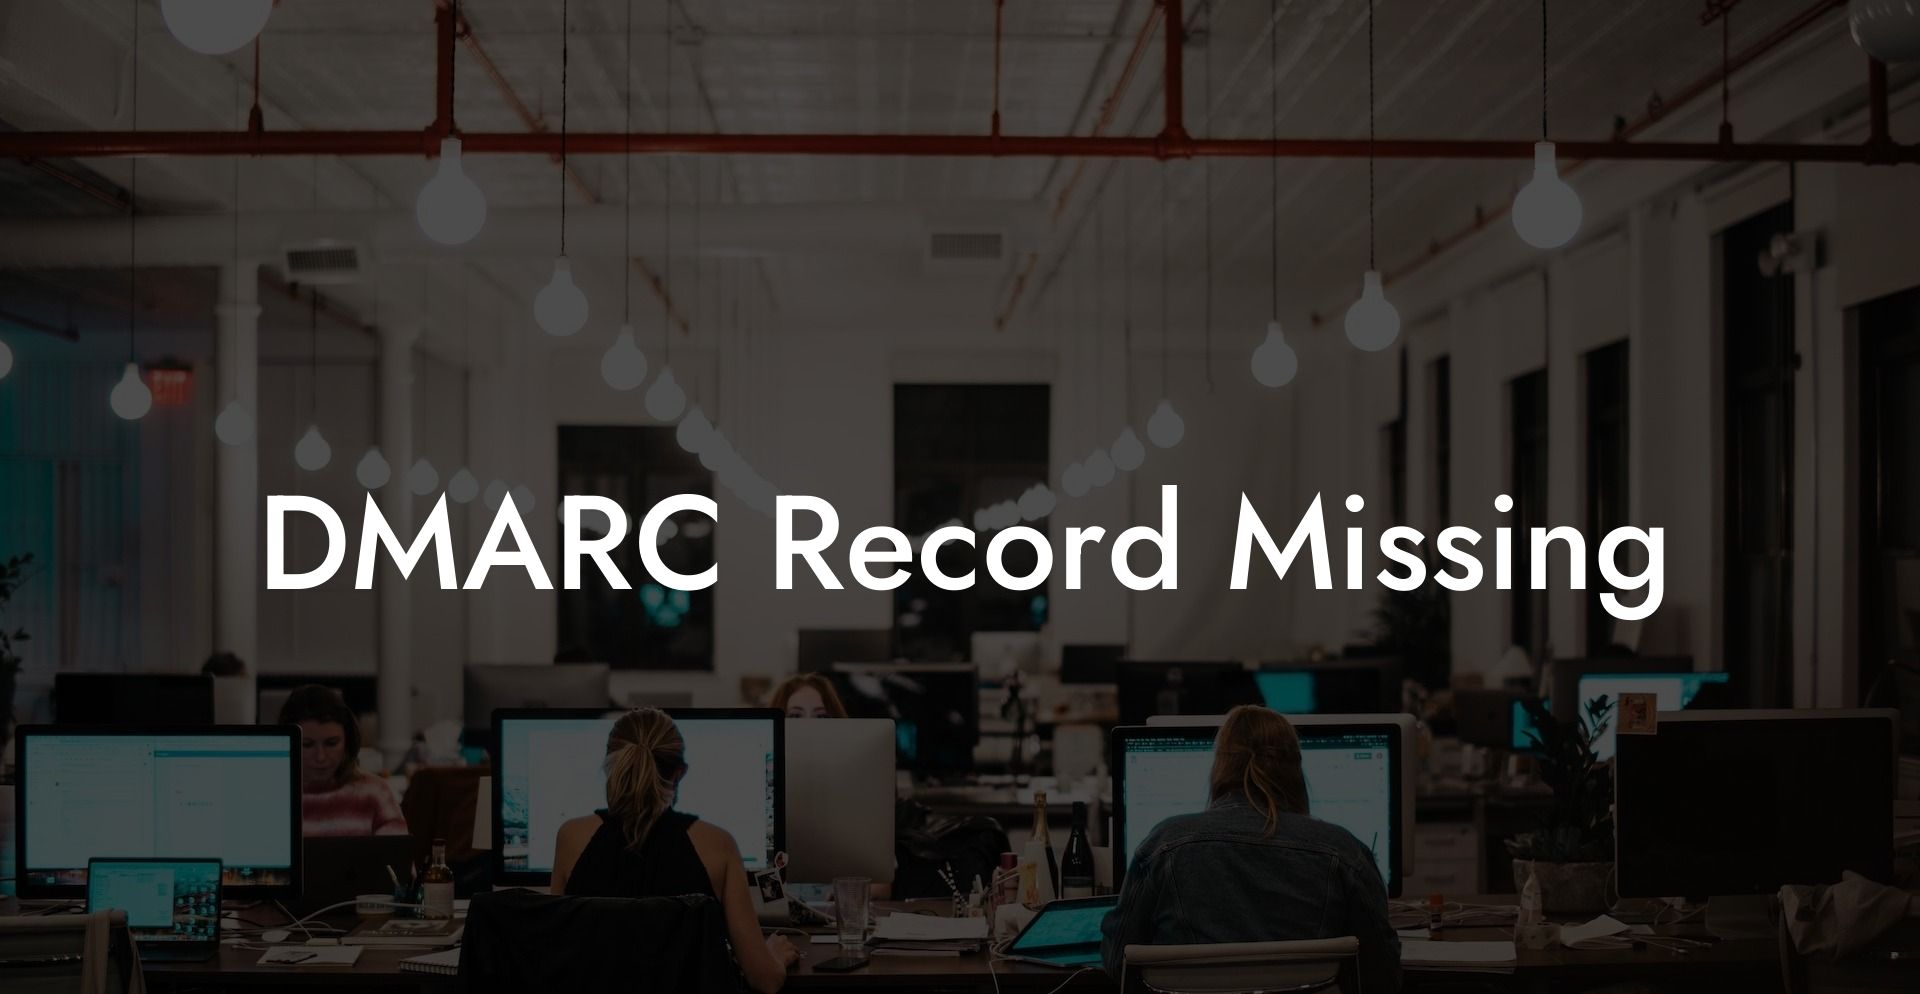 DMARC Record Missing